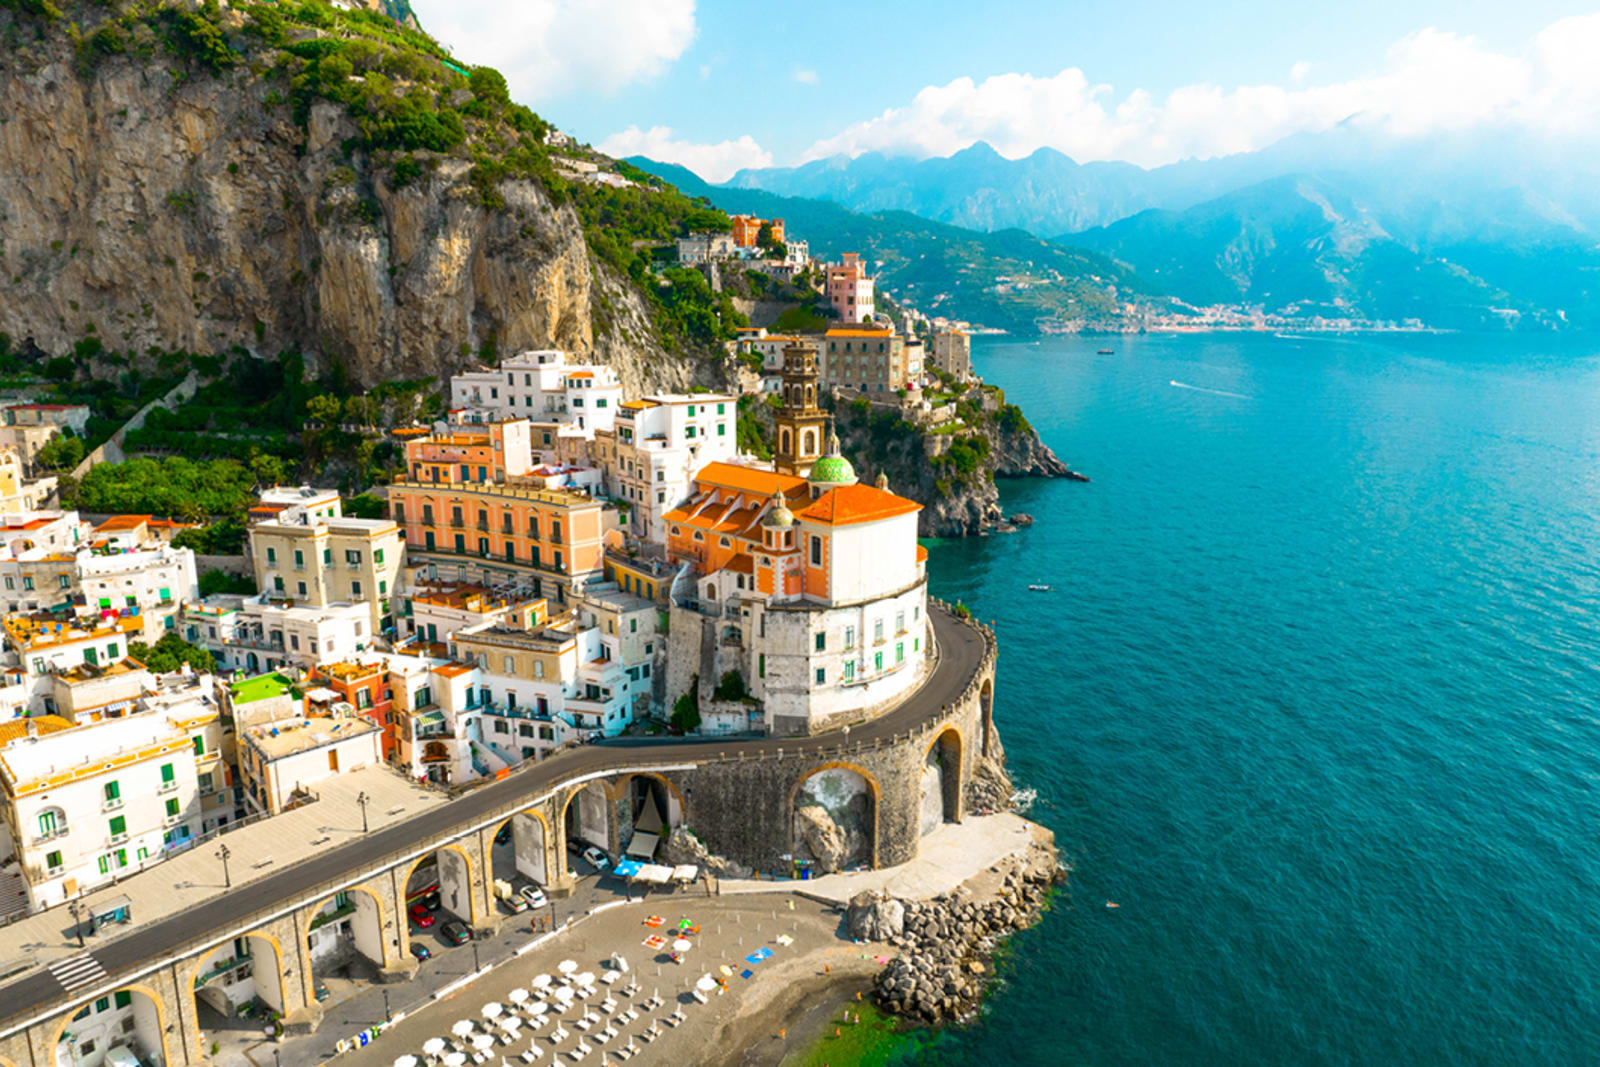 The town of Atrani on Italy's Amalfi Coast